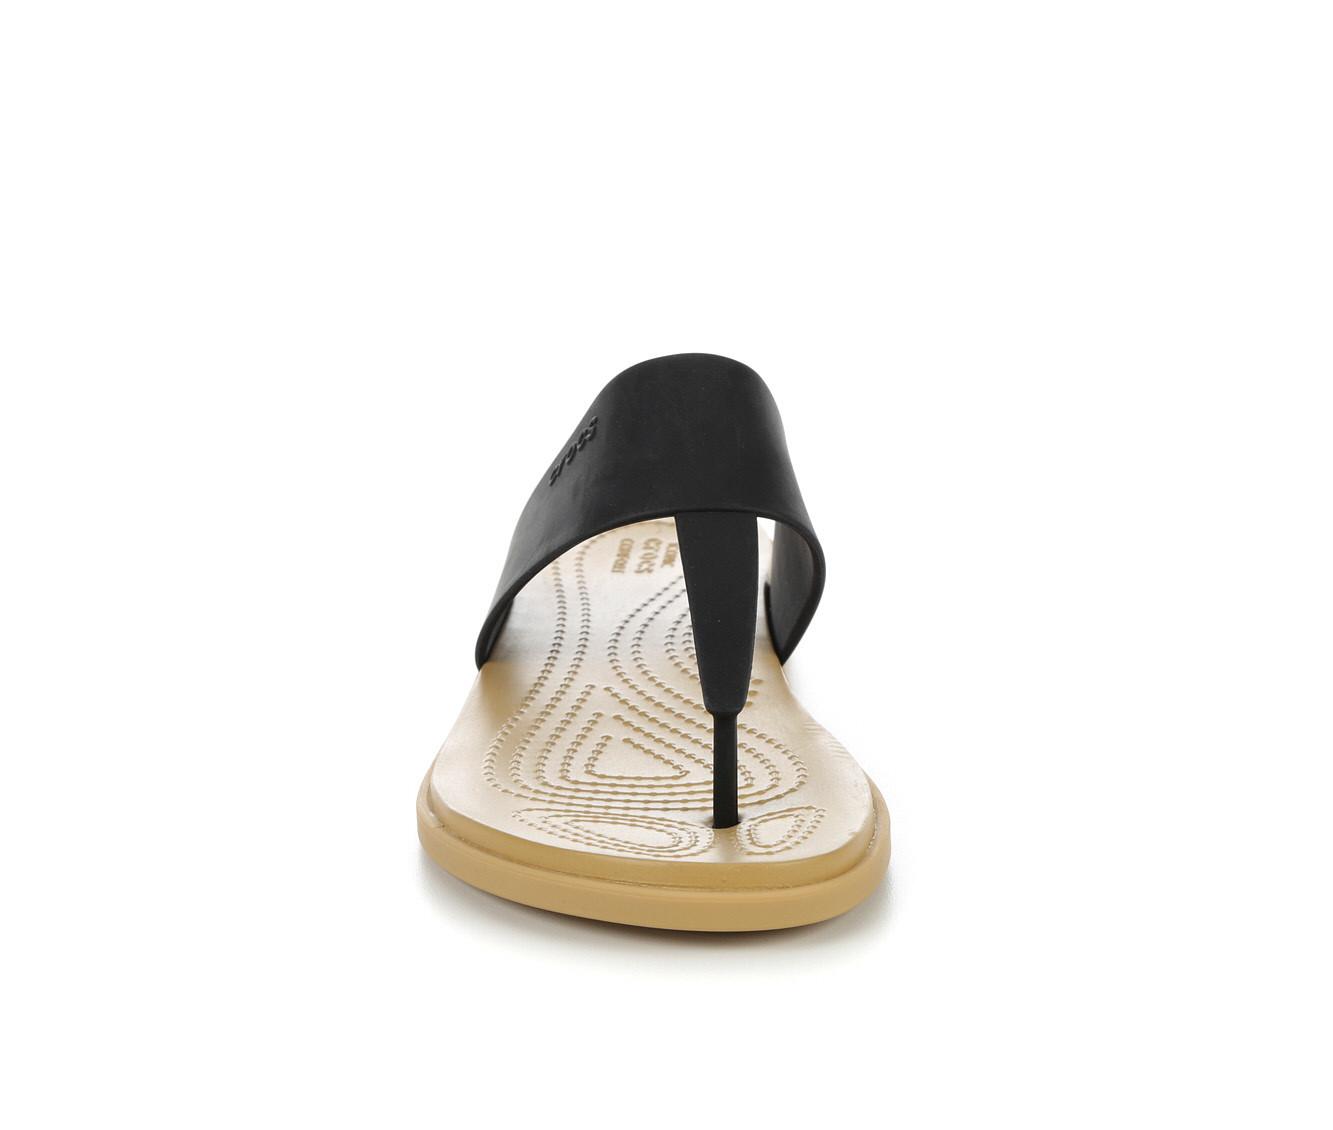 Crocs Women's Tulum Flip Sandal